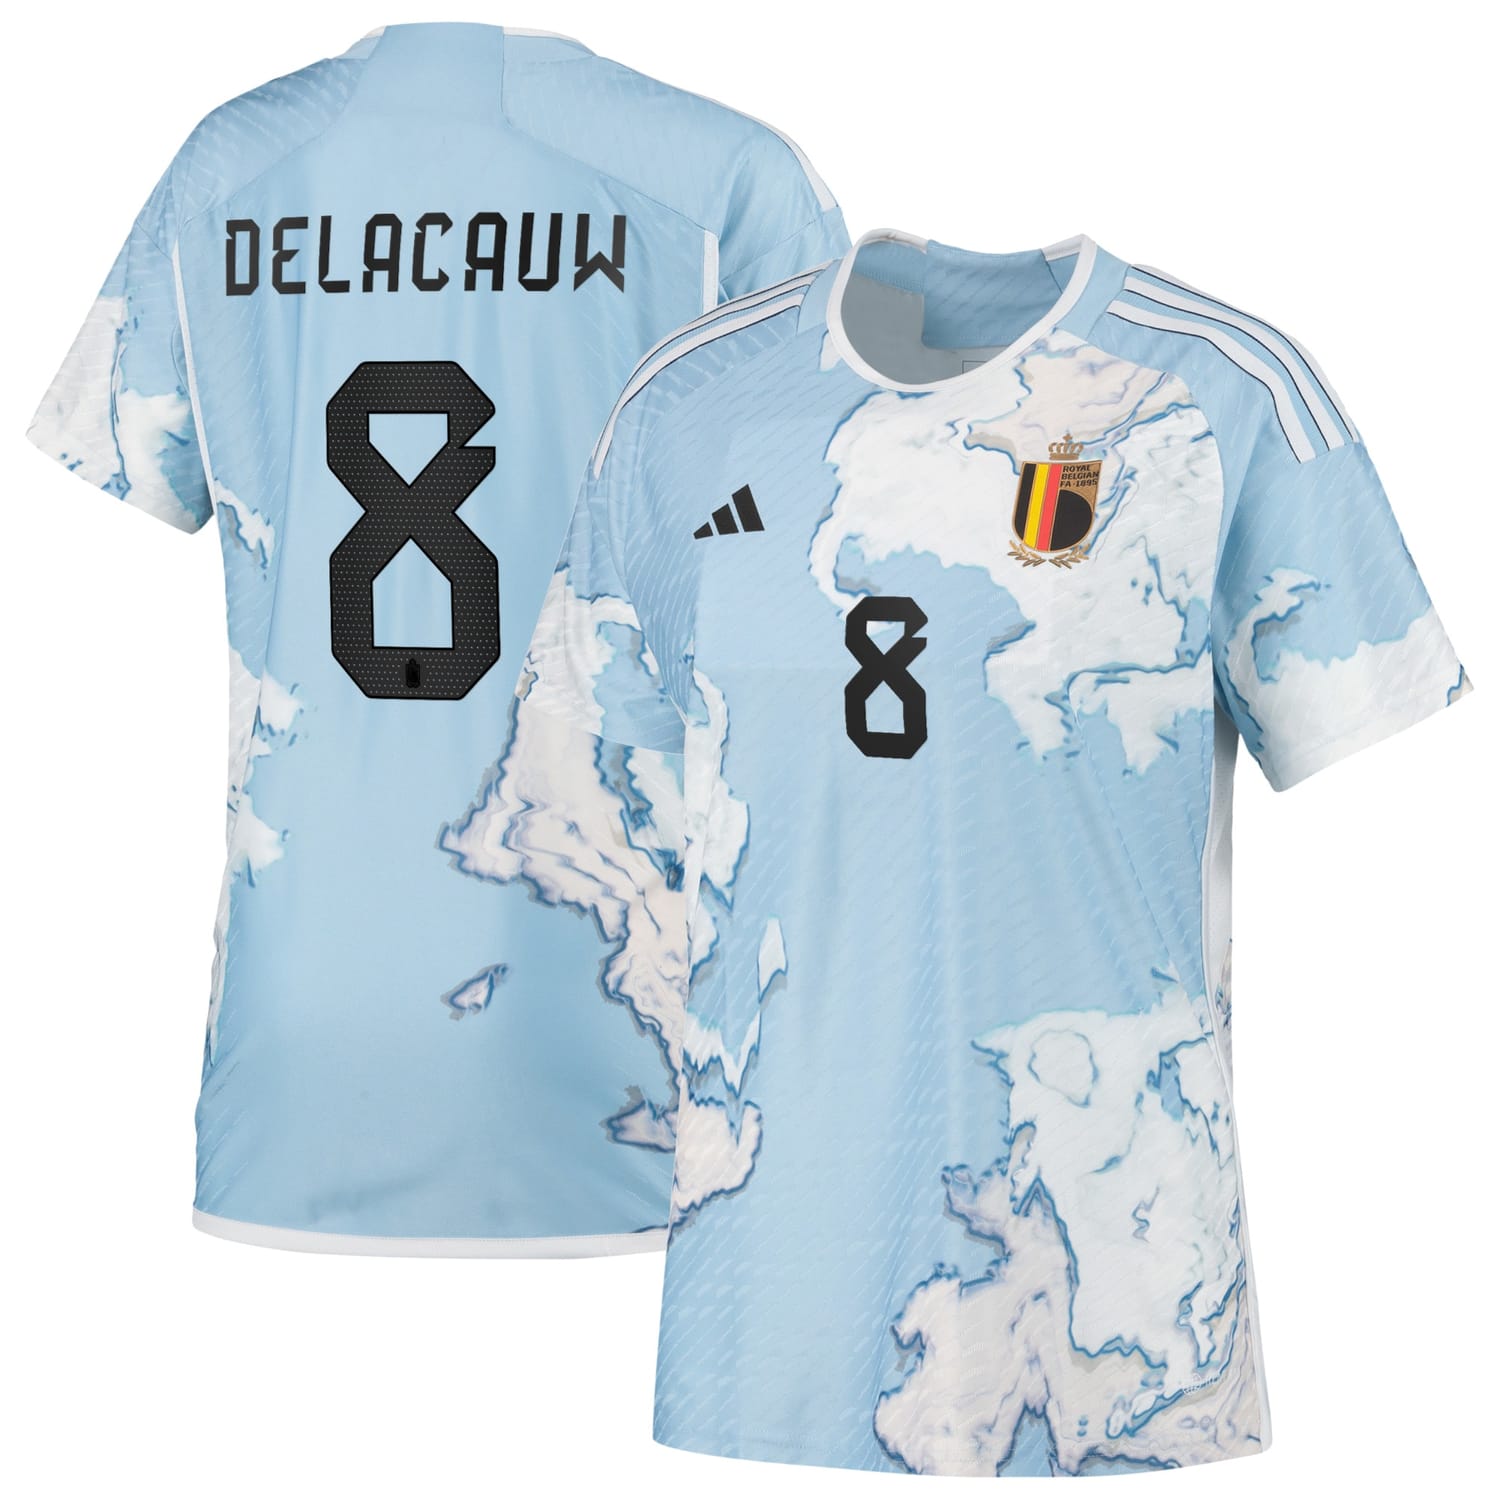 Belgium National Team Away Authentic Jersey Shirt 2023 player Féli Delacauw 8 printing for Women